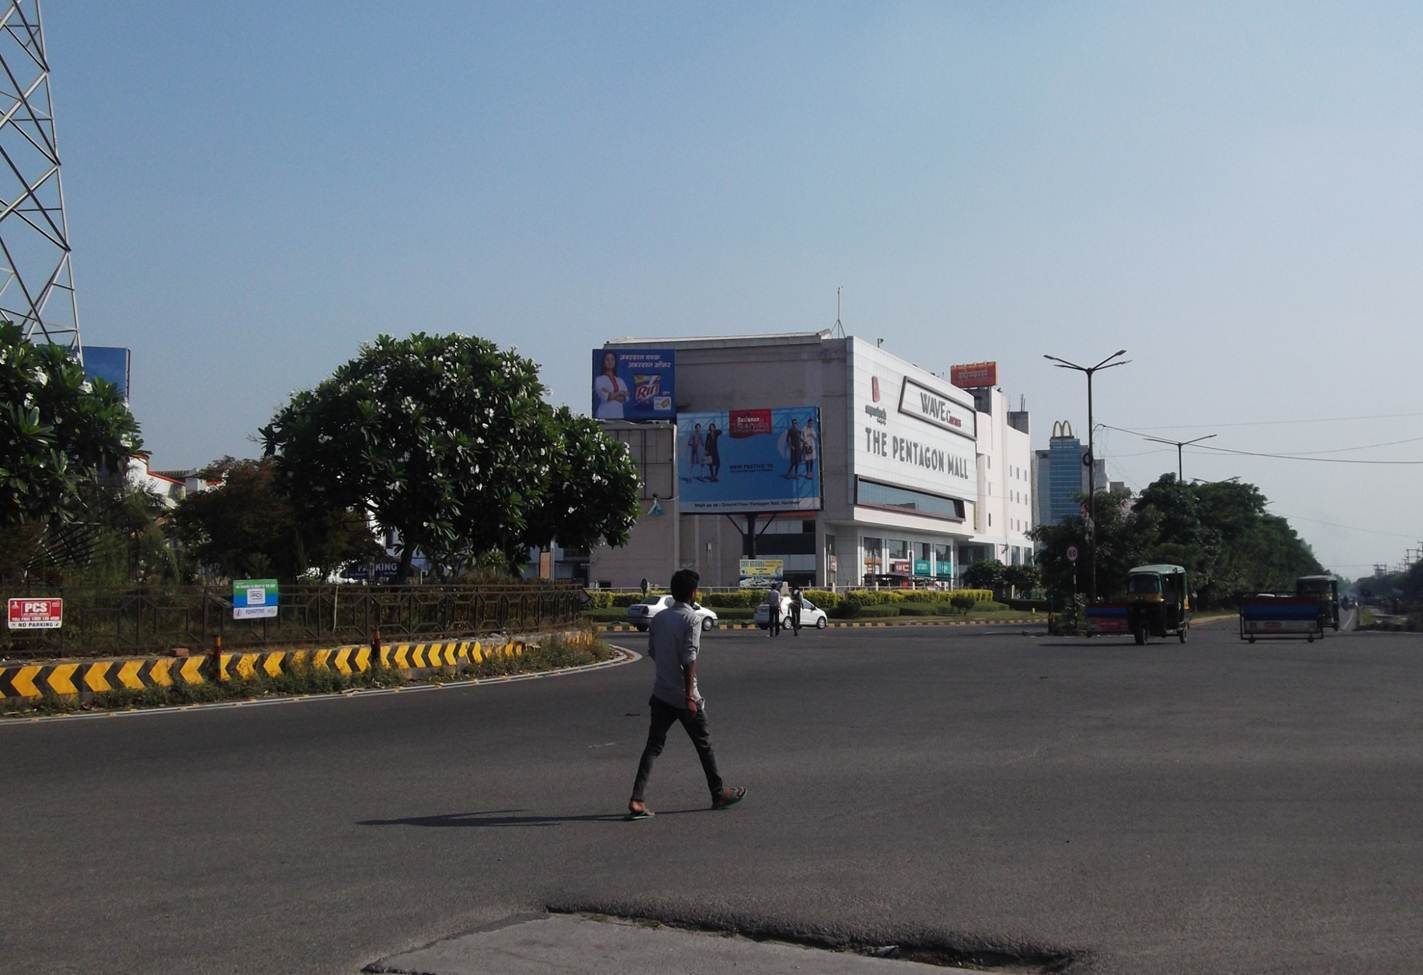 Pentagon Mall, Haridwar